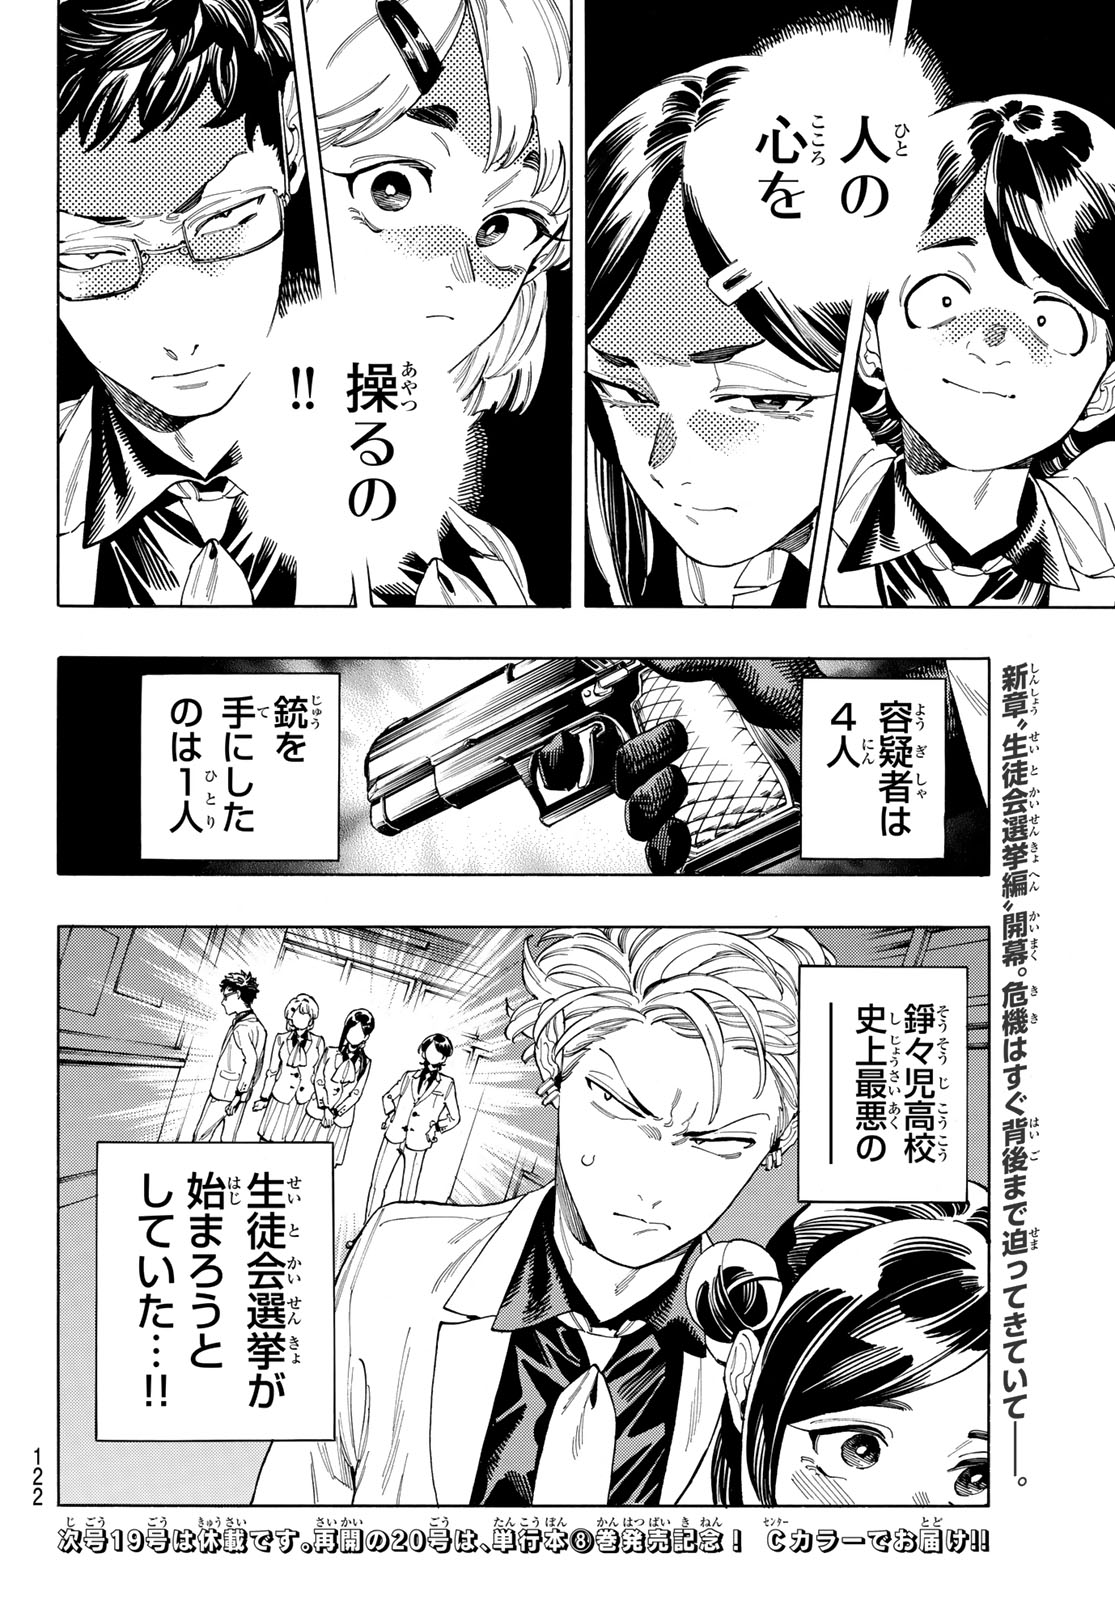 Akabane Honeko no Bodyguard - Chapter 75 - Page 20